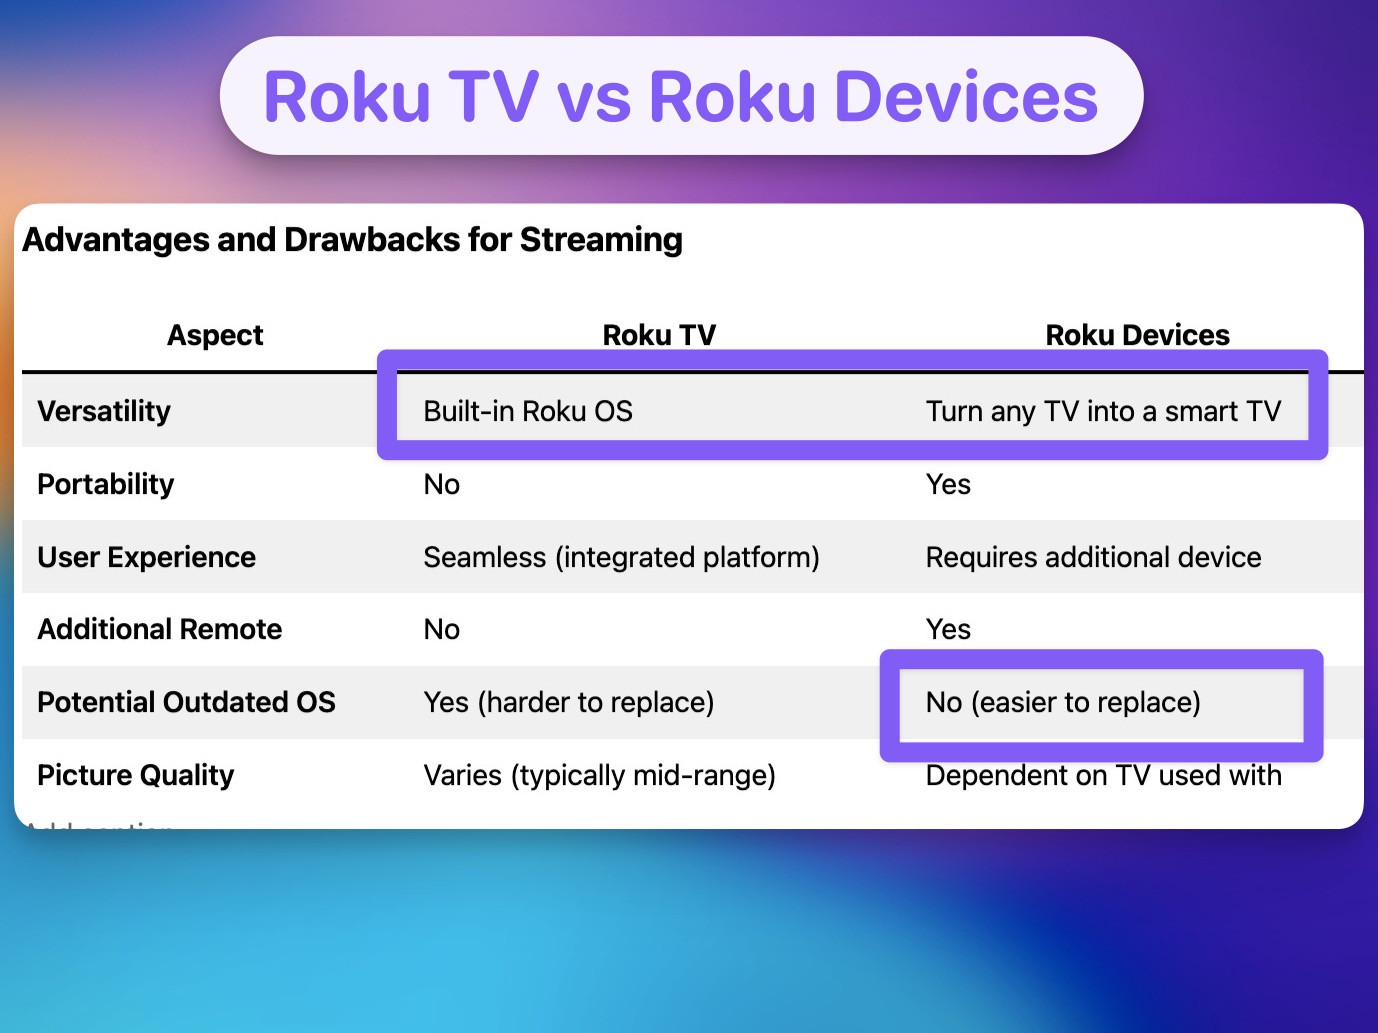 Roku TV vs Roku Devices main differences